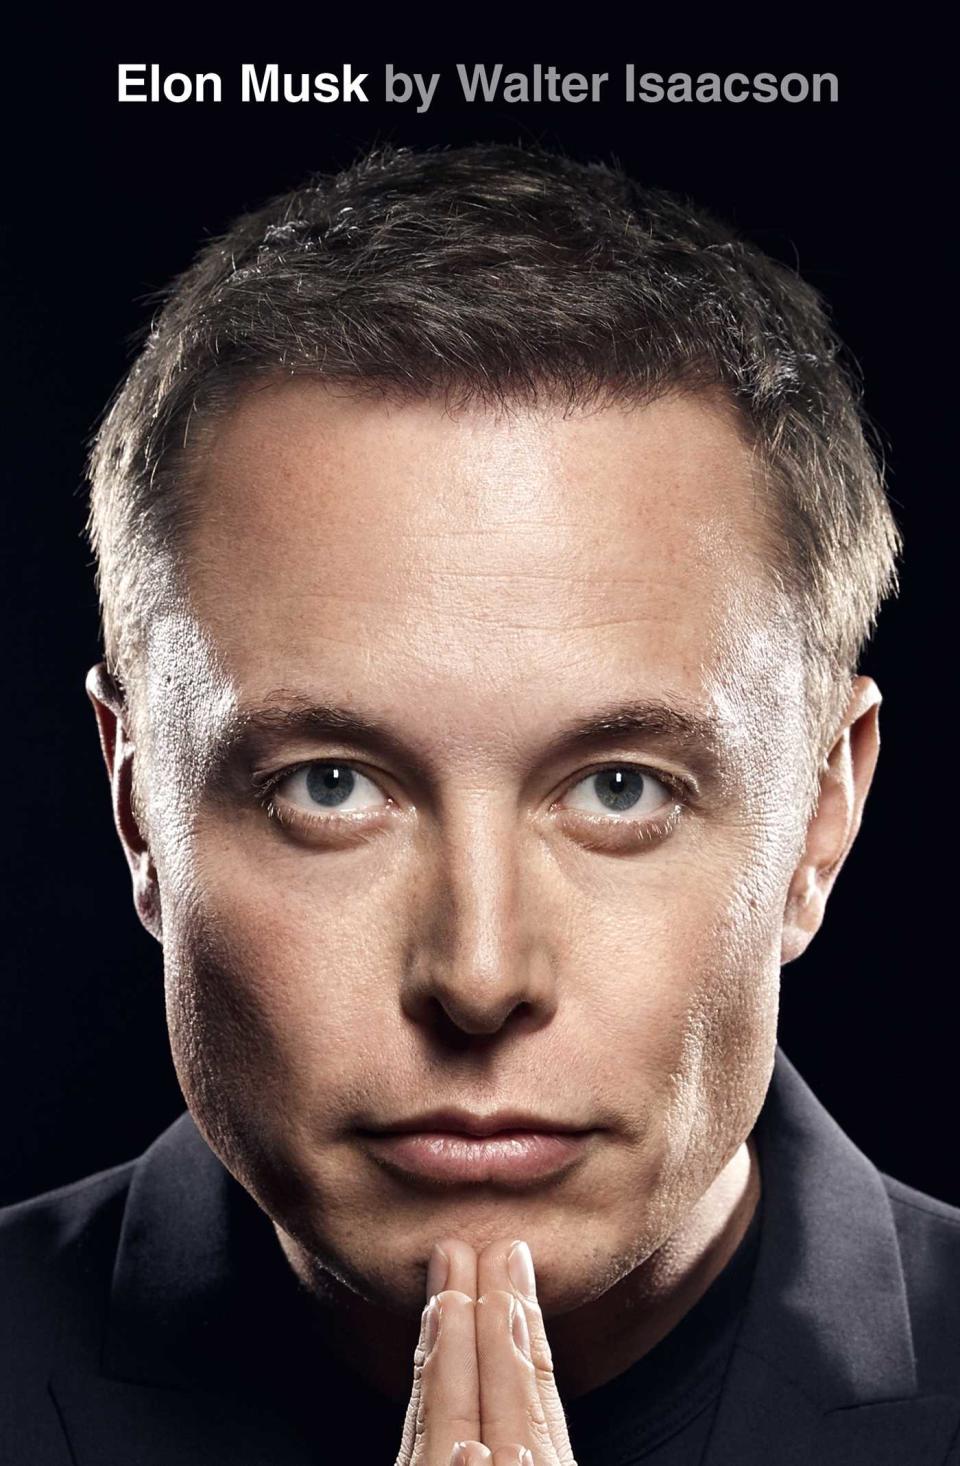 "Elon Musk" by Walter Isaacson